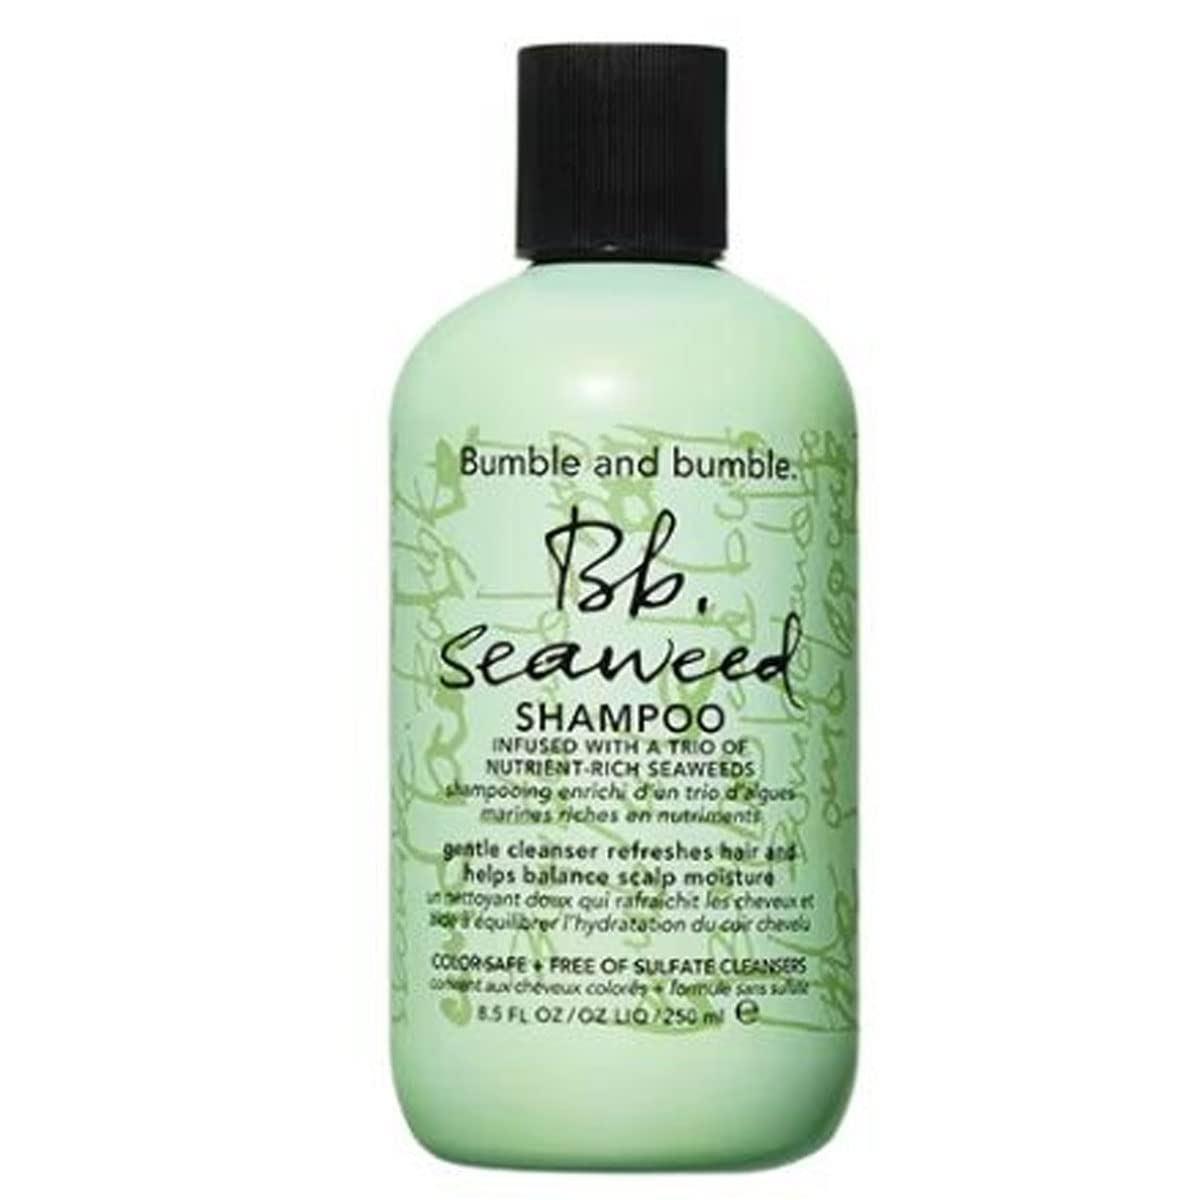 Bumble and bumble Seaweed Shampoo 8.5 oz / 250 ml